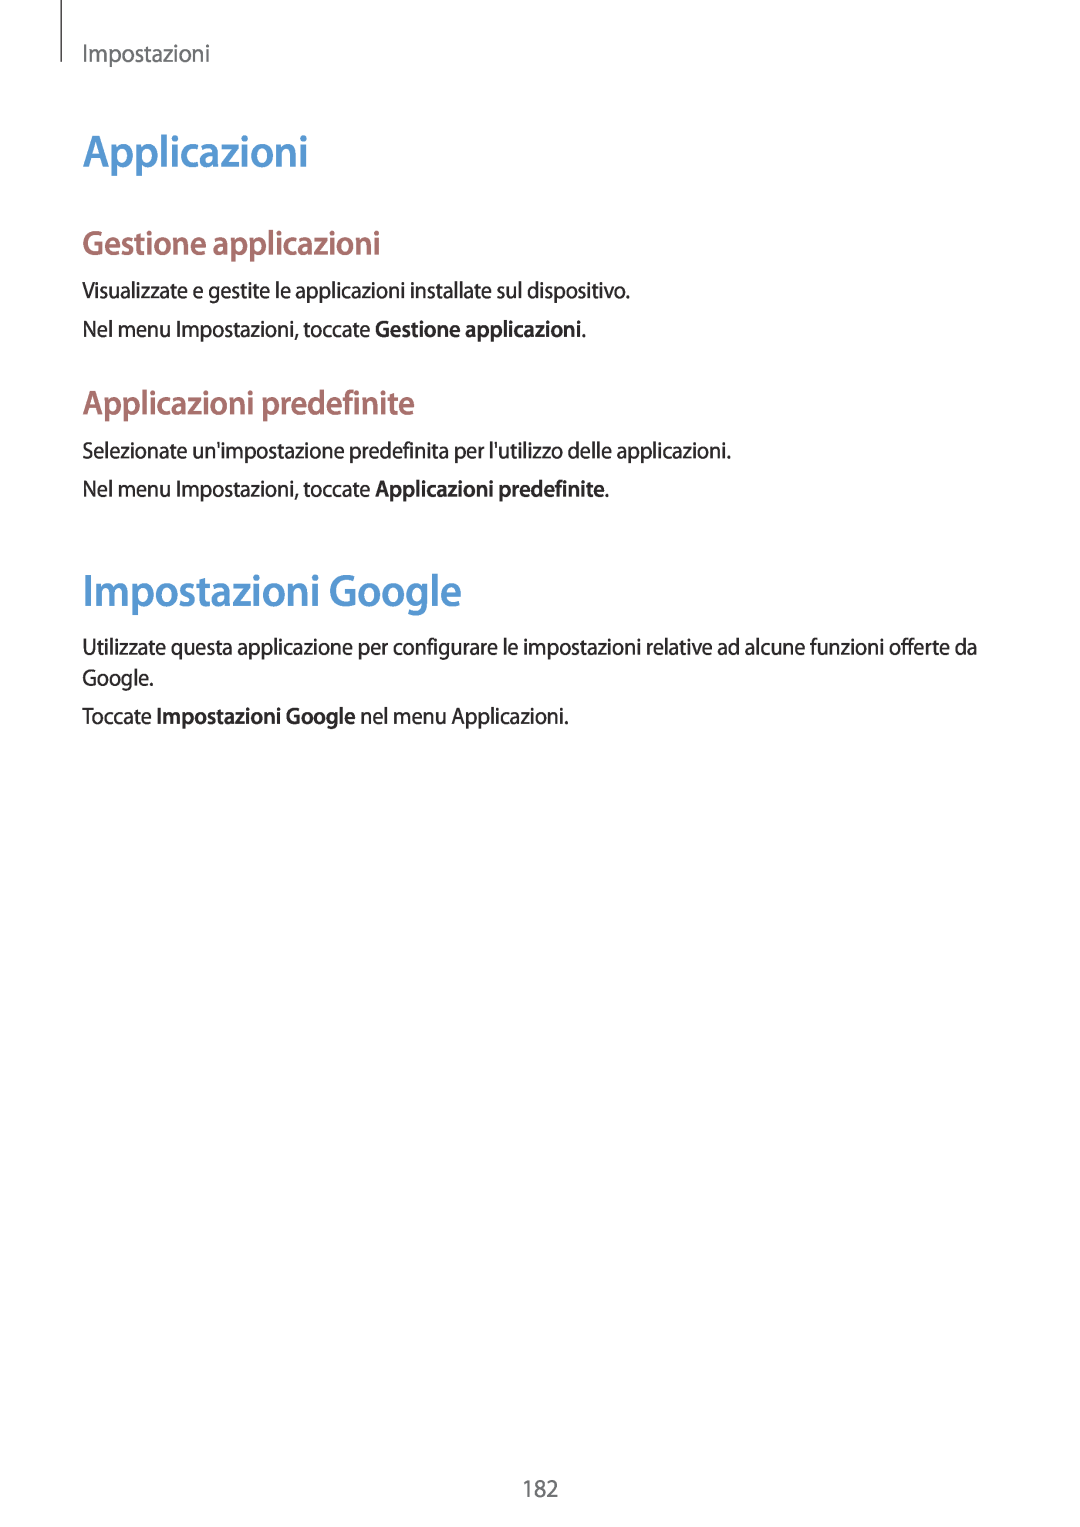 Samsung SM-G900FZDADBT, SM-G900FZKADBT manual Impostazioni Google, Gestione applicazioni, Applicazioni predefinite 